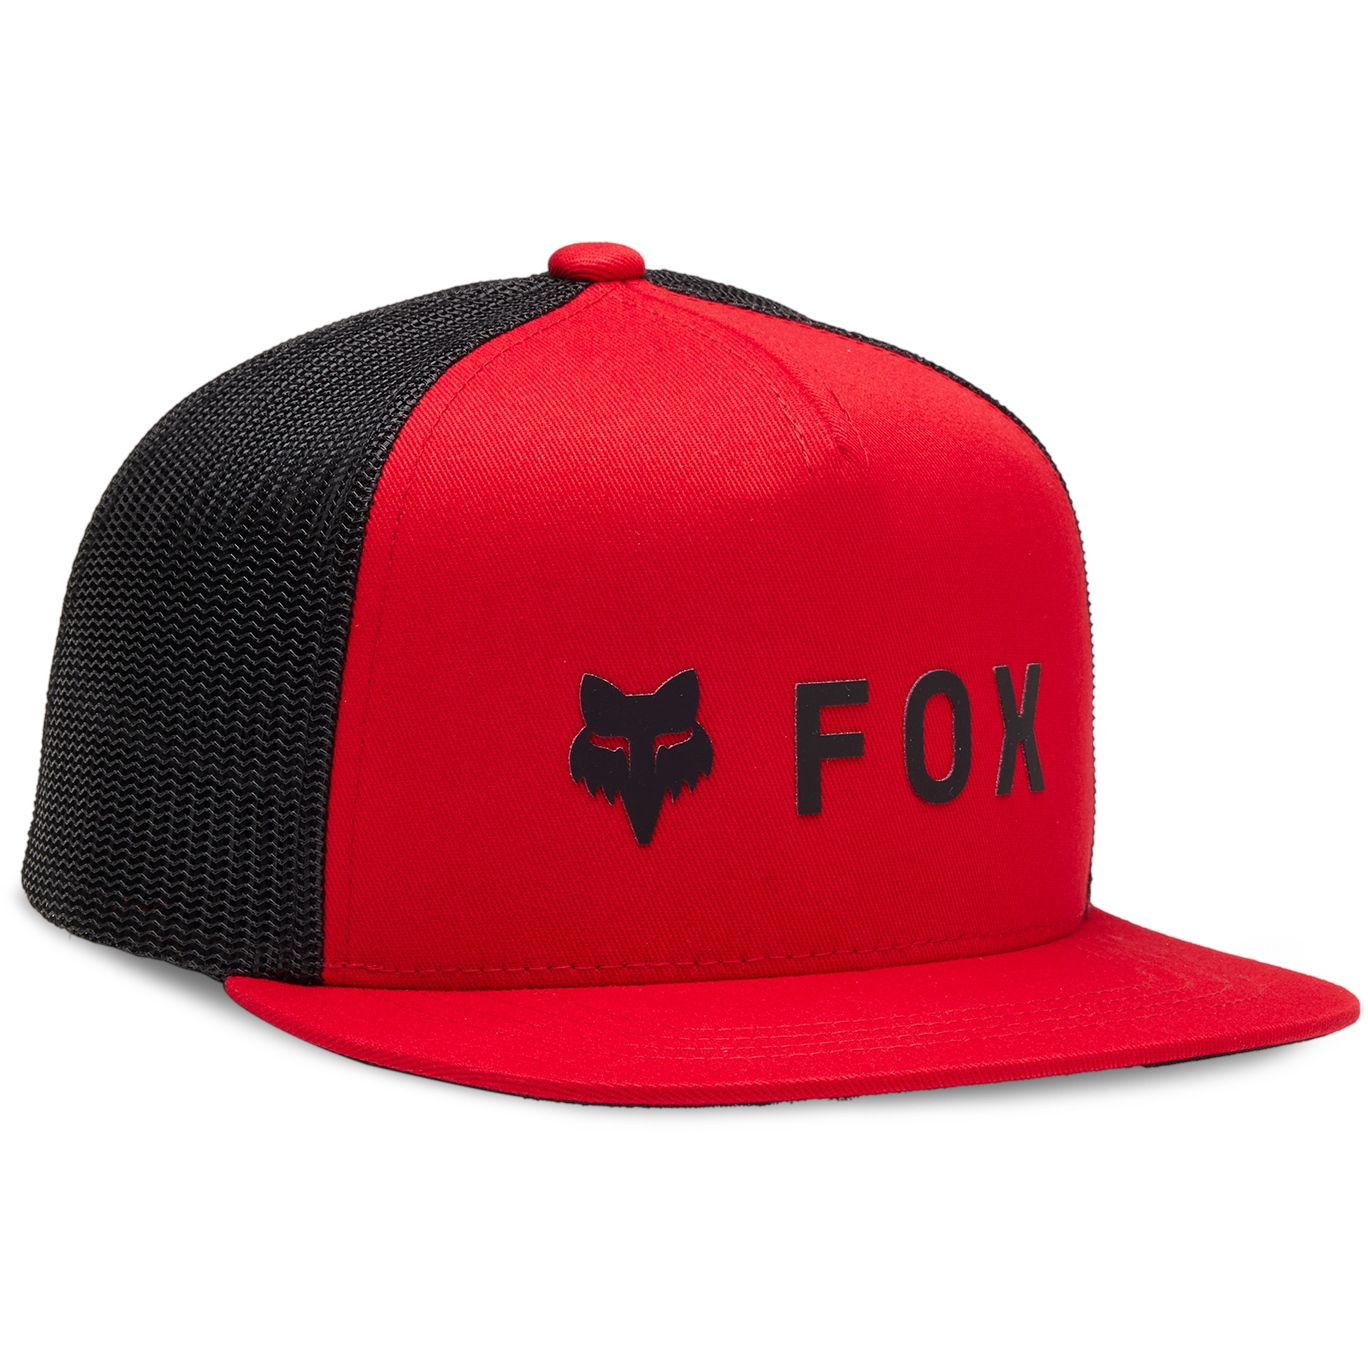 Productfoto van FOX Absolute Snapback Mesh Pet Kinderen - flame red